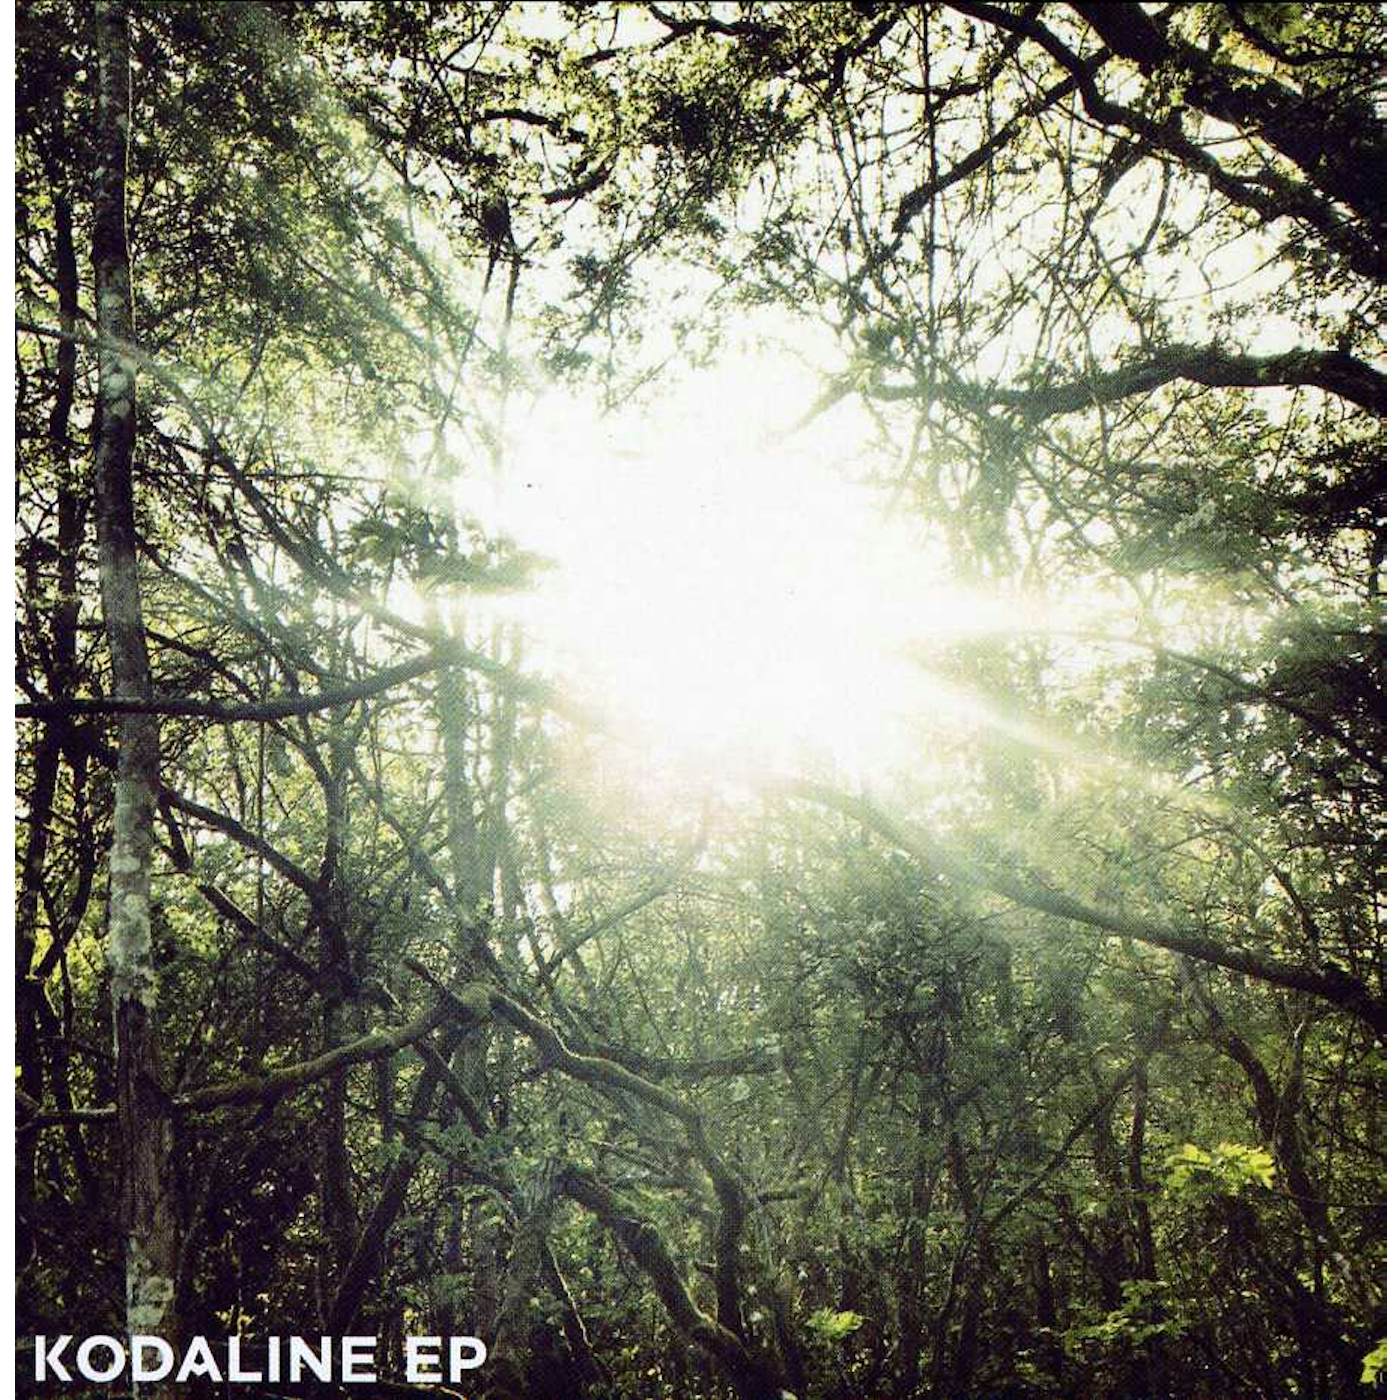 KODALINE EP CD